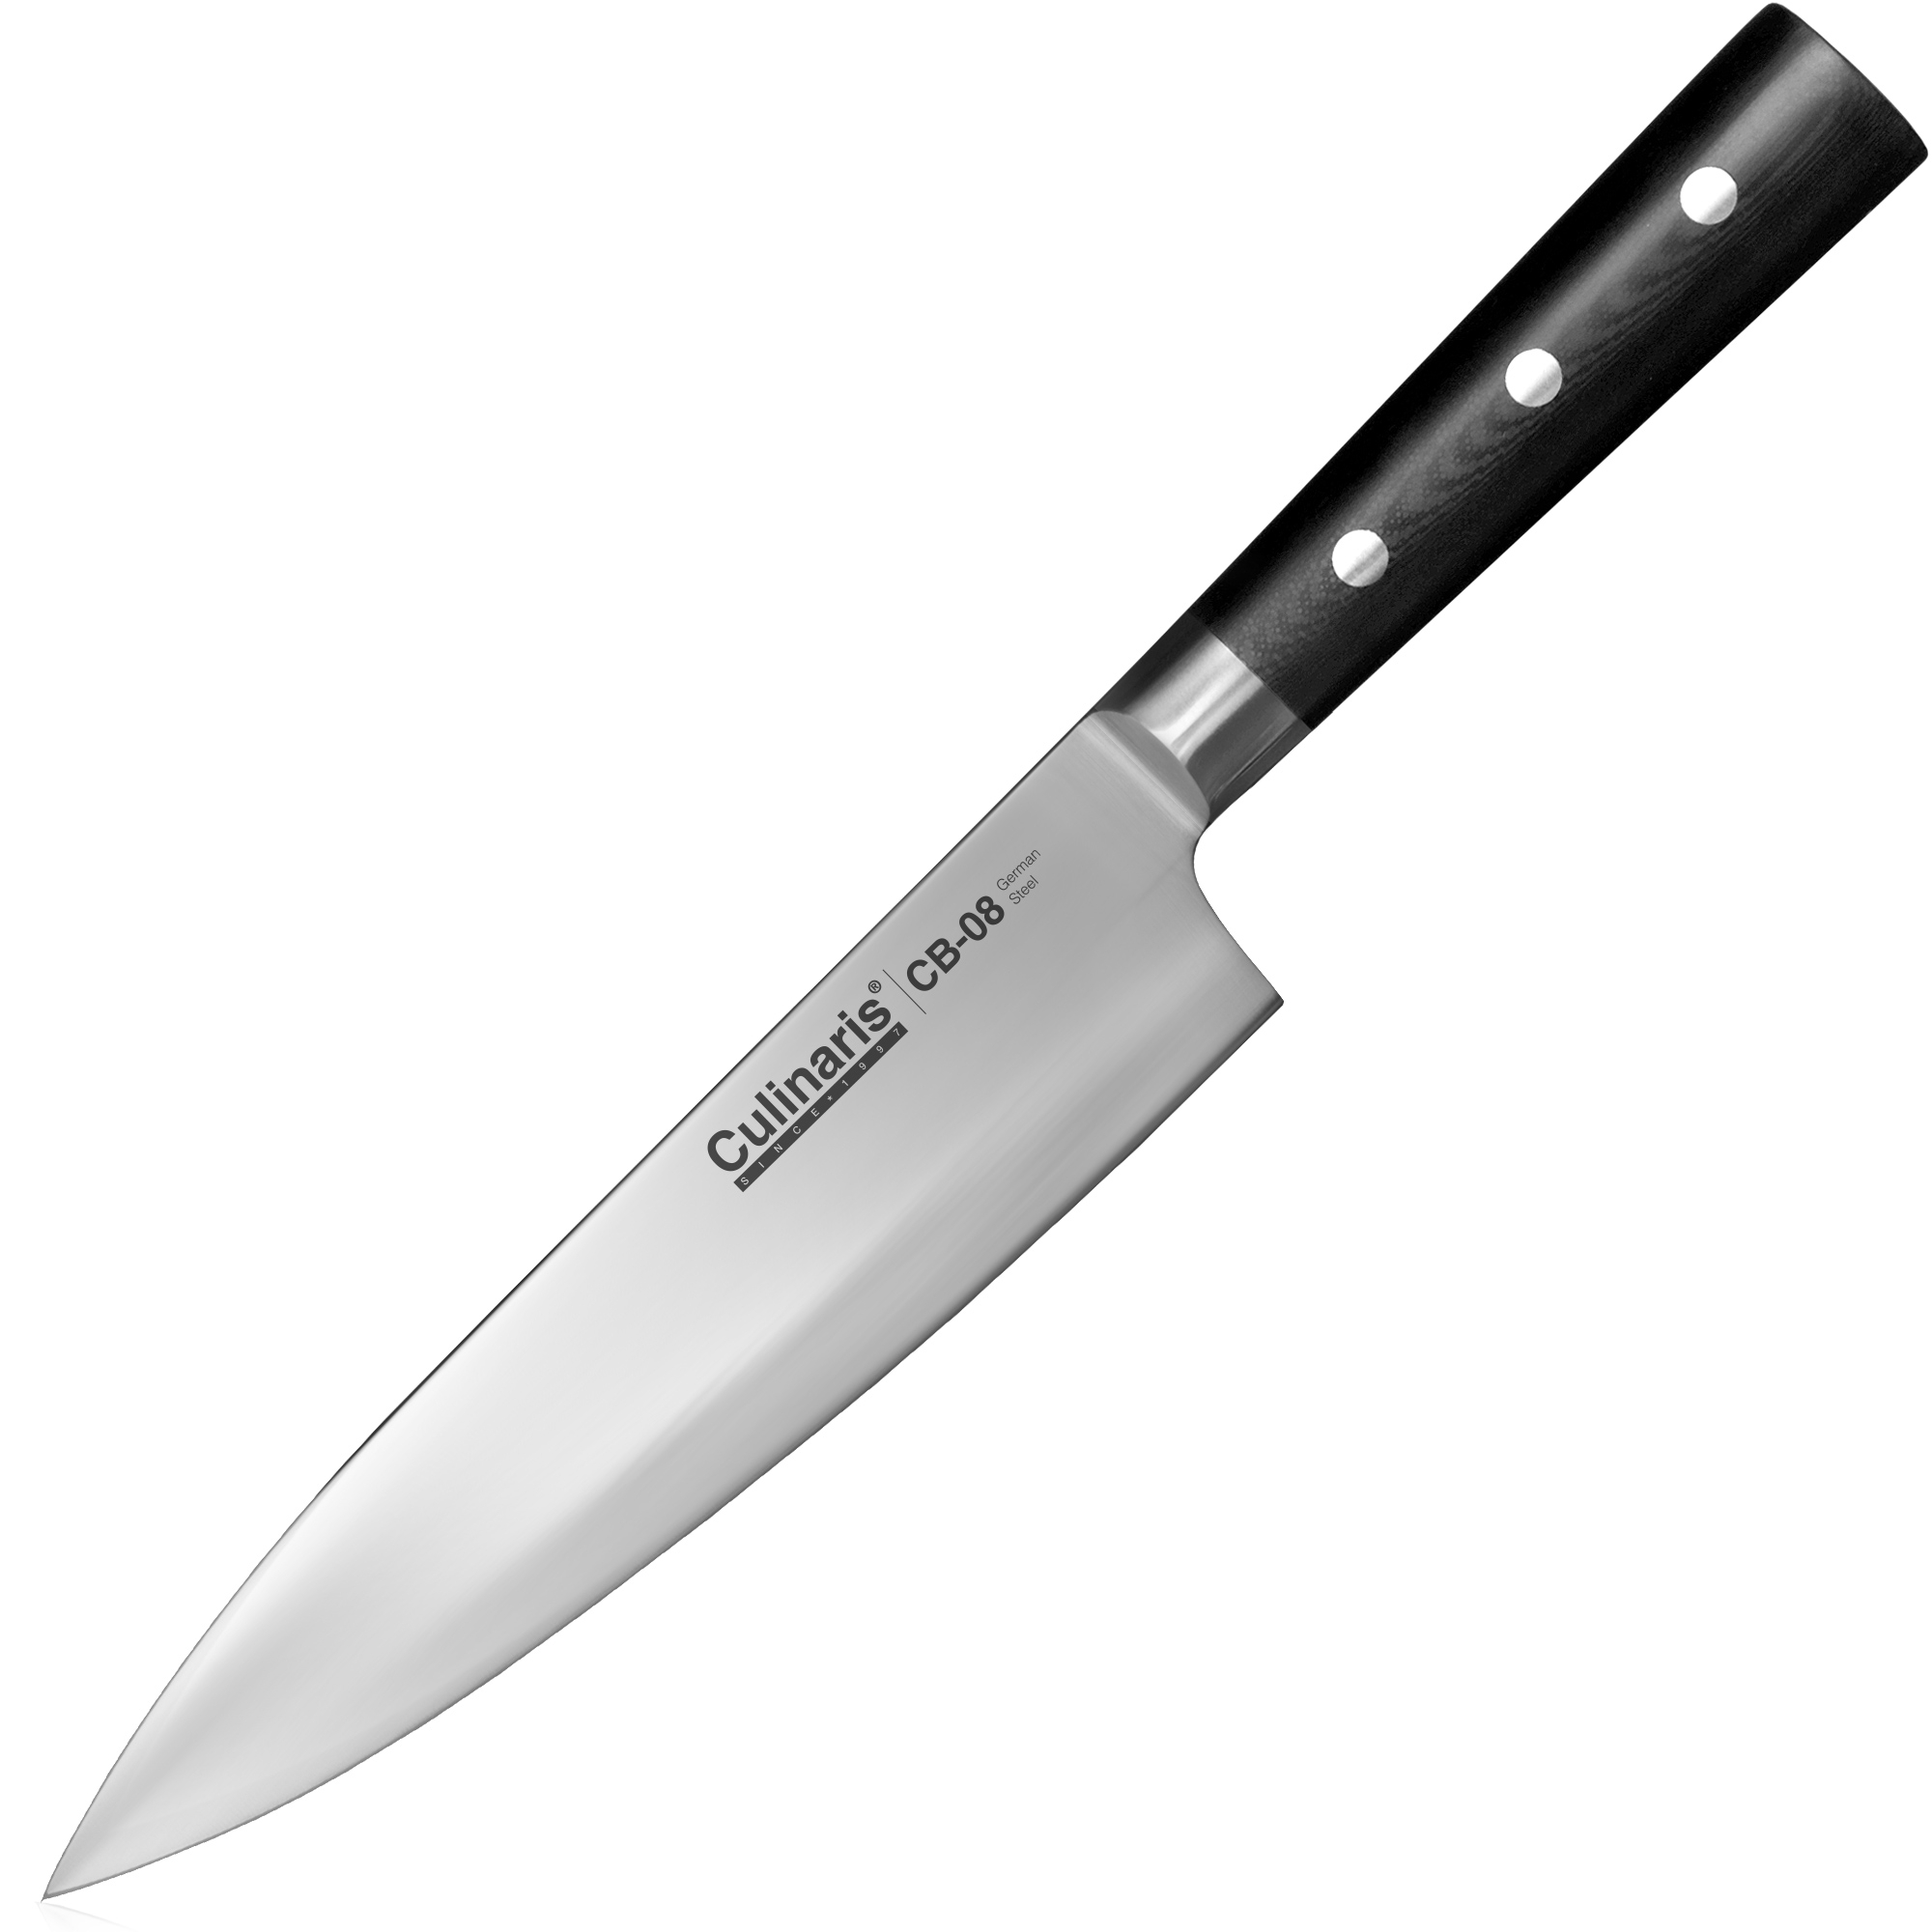 Culinaris - Knife Set - Chef's Knife CB-08 + Paring Knife CB-01